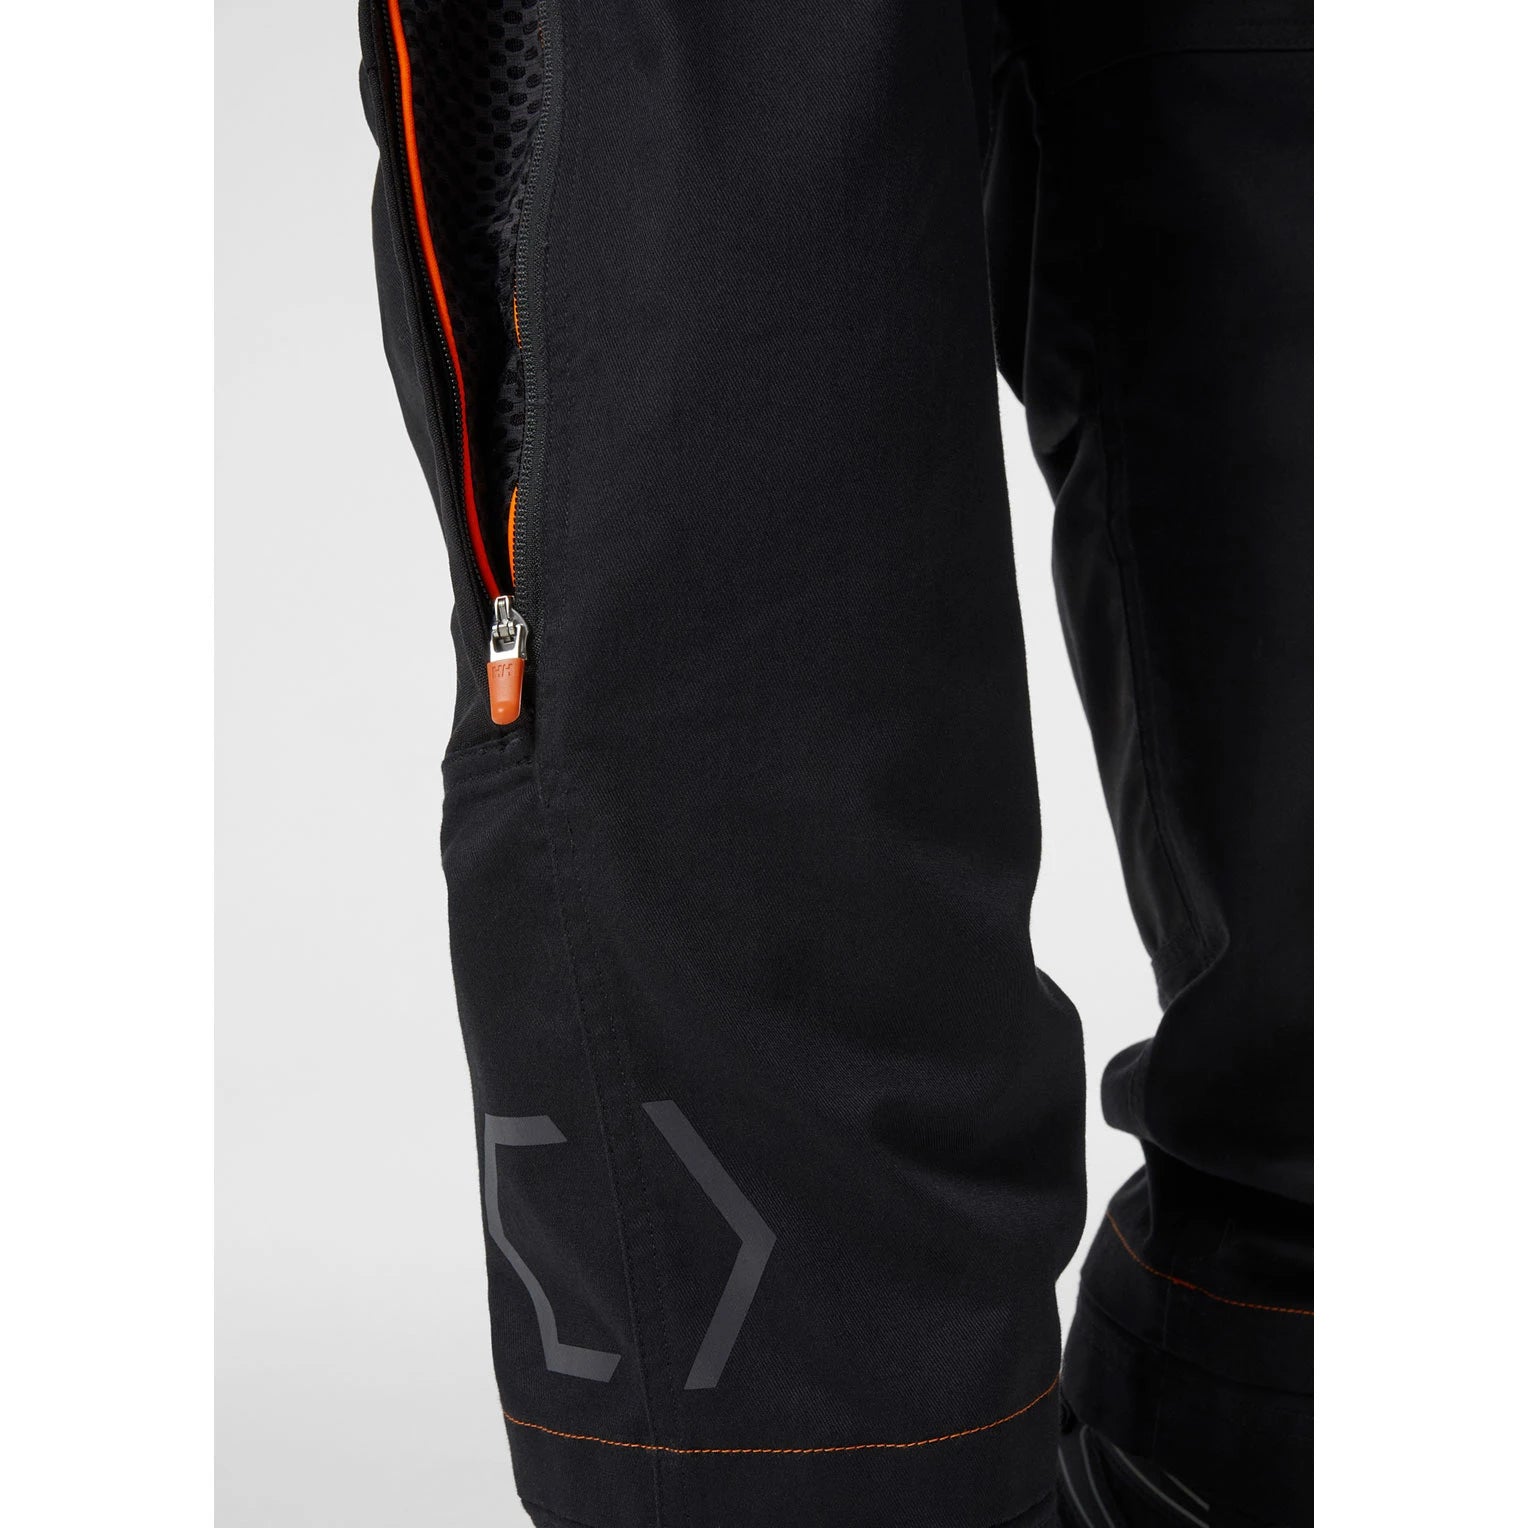 Work pants - 76475 - HELLY HANSEN Work Wear - fire-retardant / arc  protection / high-visibility